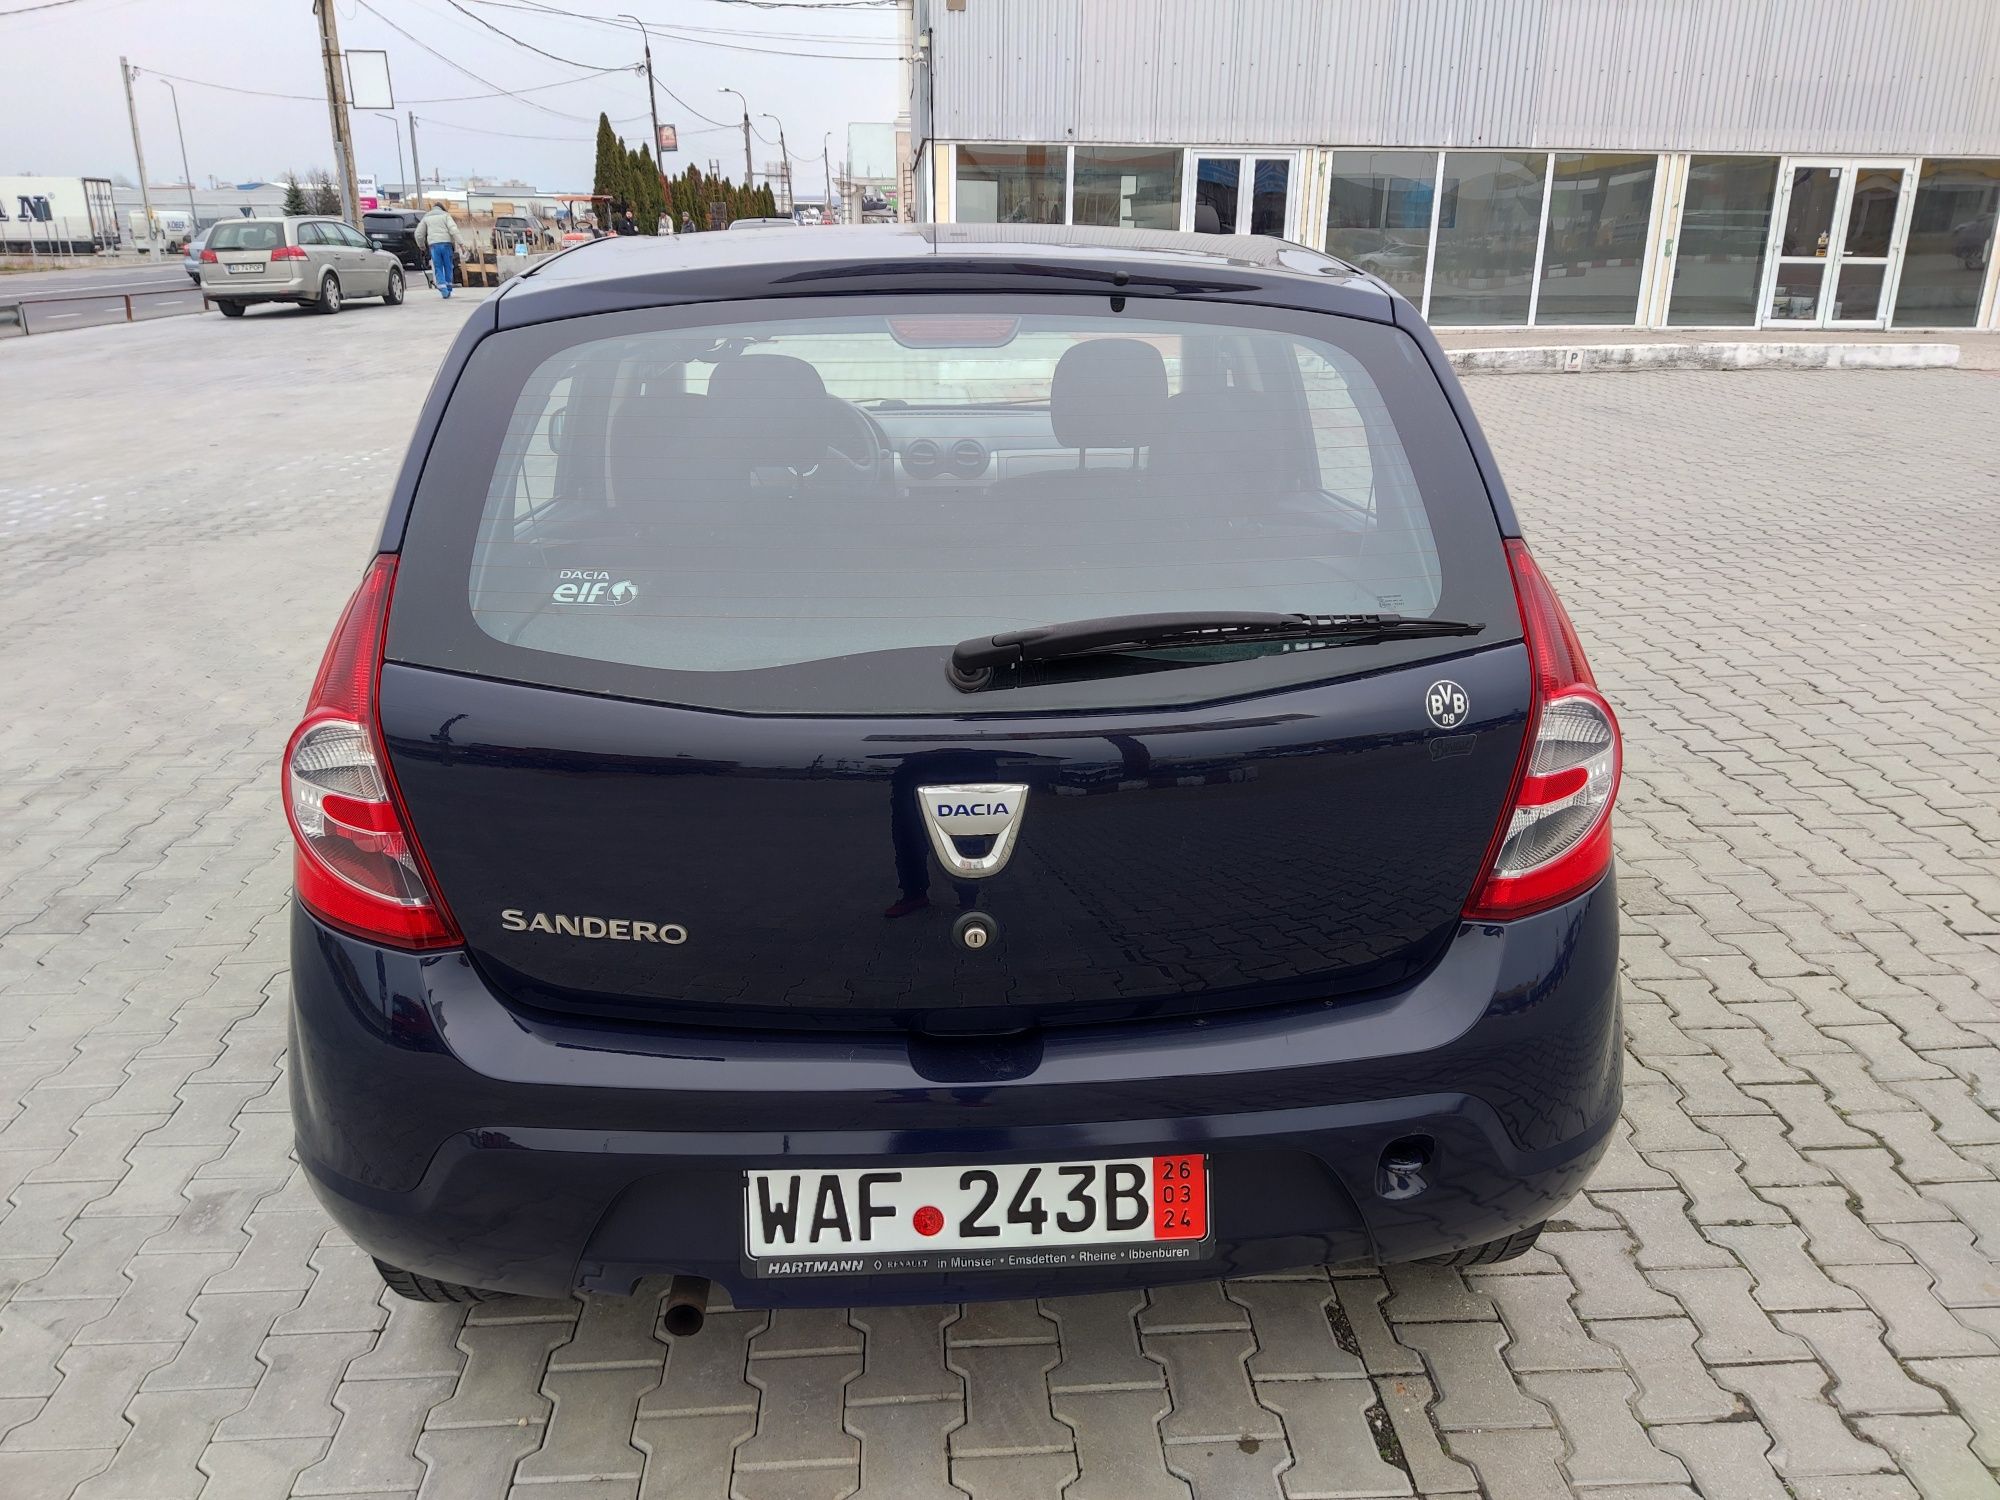 Dacia Sandero 1,2 MPI 75cp benzină